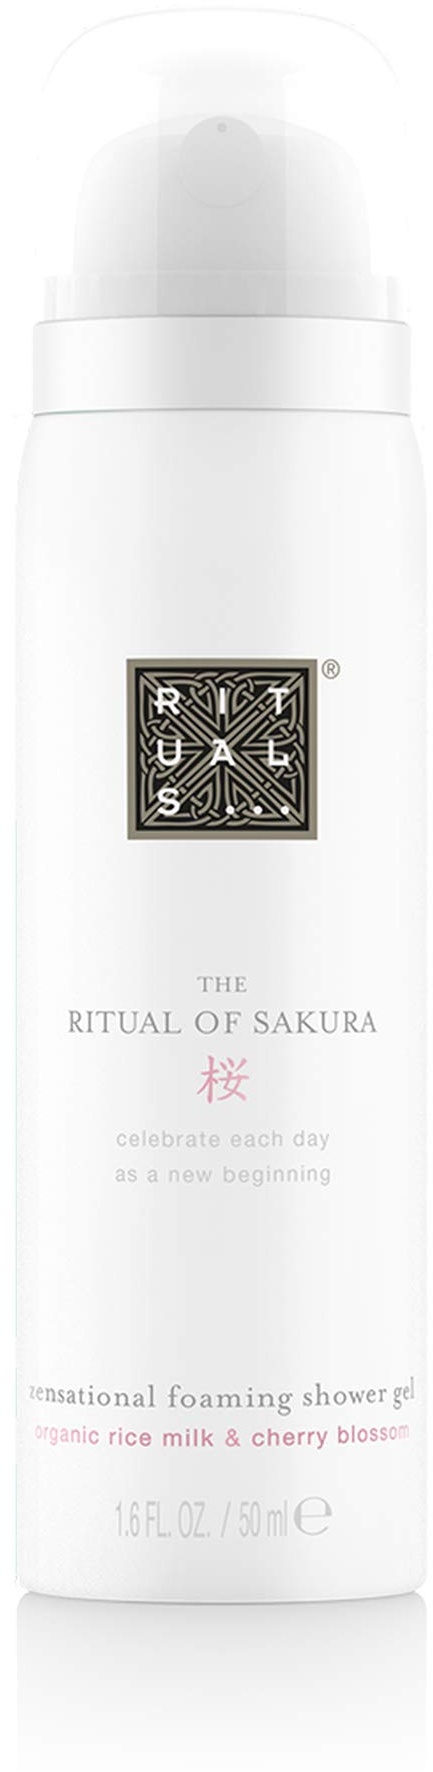 ritual of sakura